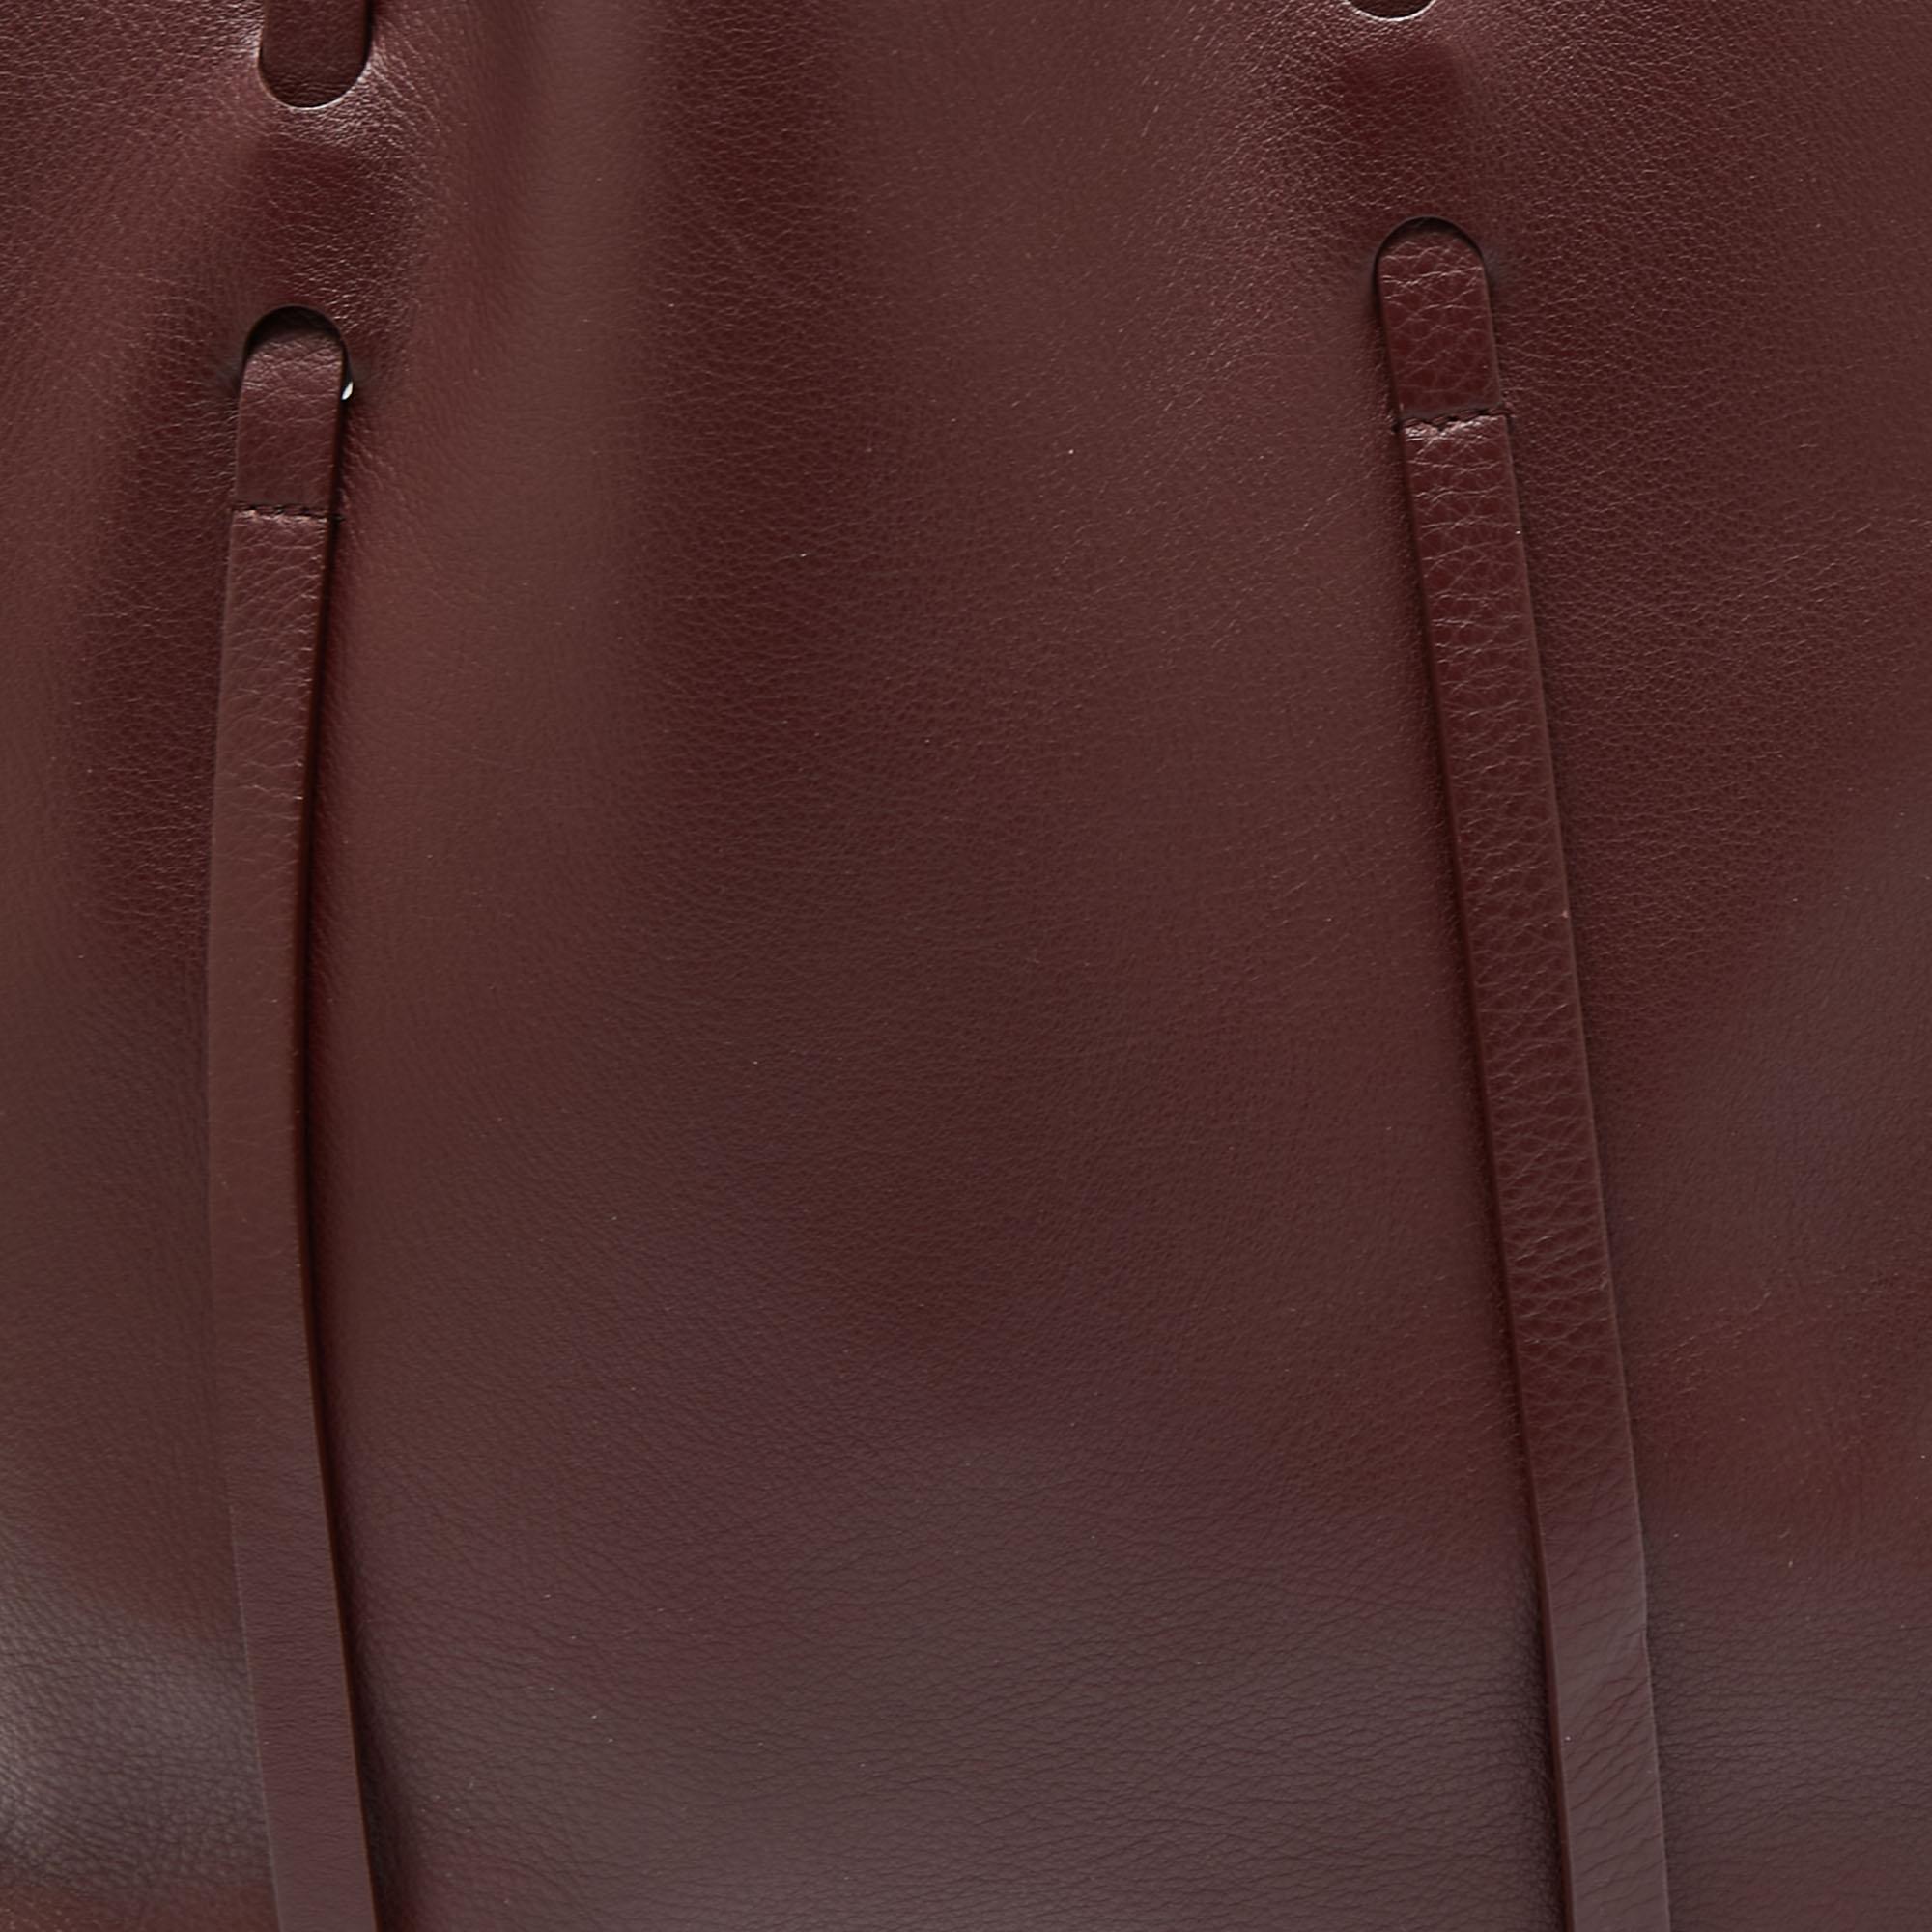 Balenciaga Burgundy Leather Medium Everyday Tote 5